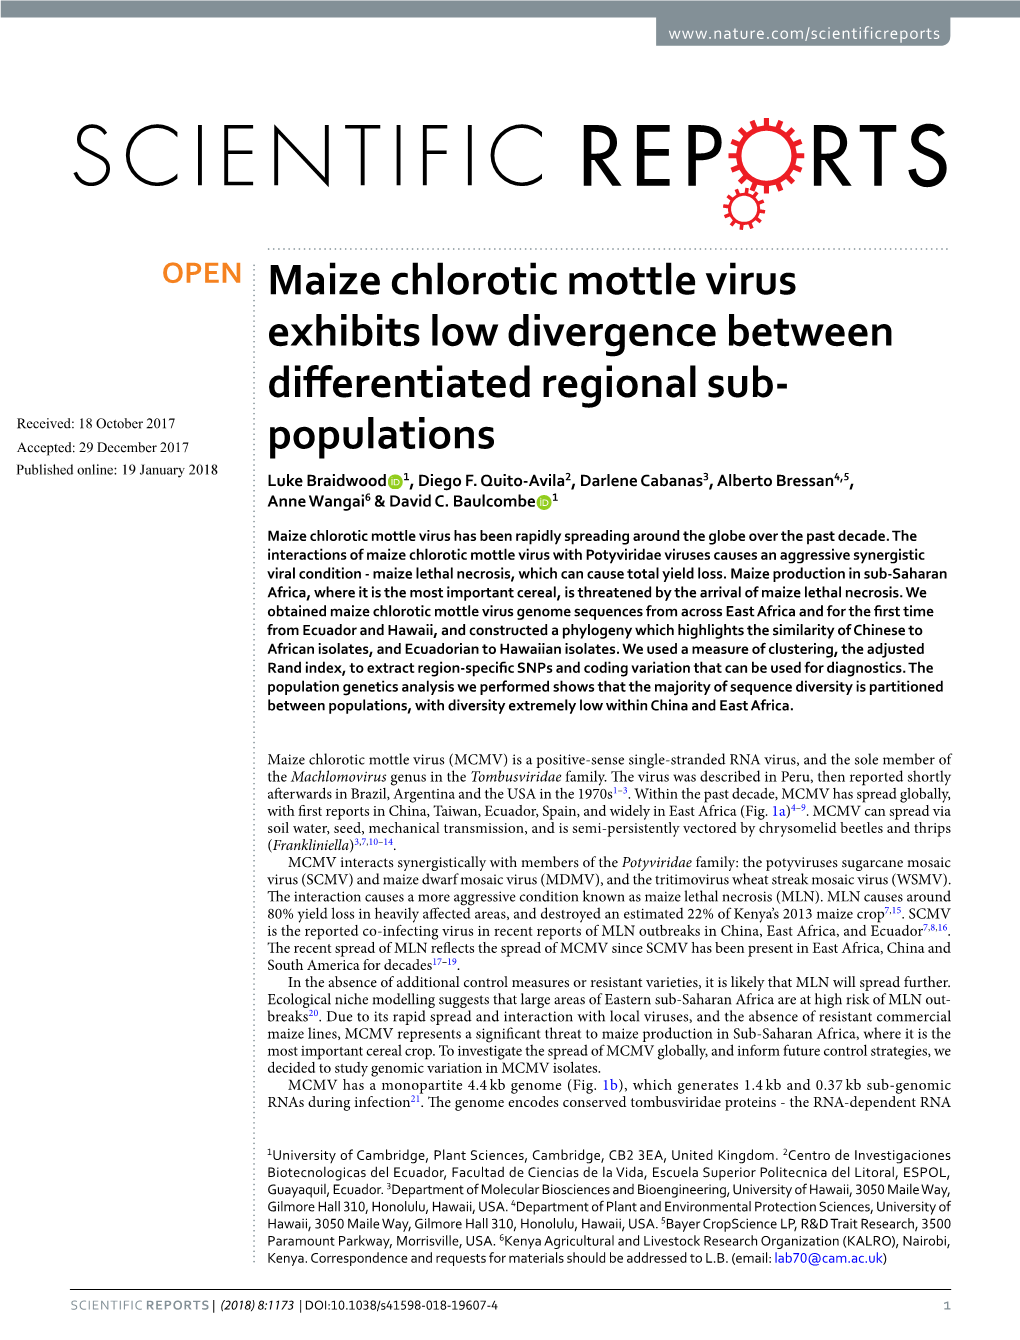 Maize Chlorotic Mottle Virus Exhibits Low Divergence Between